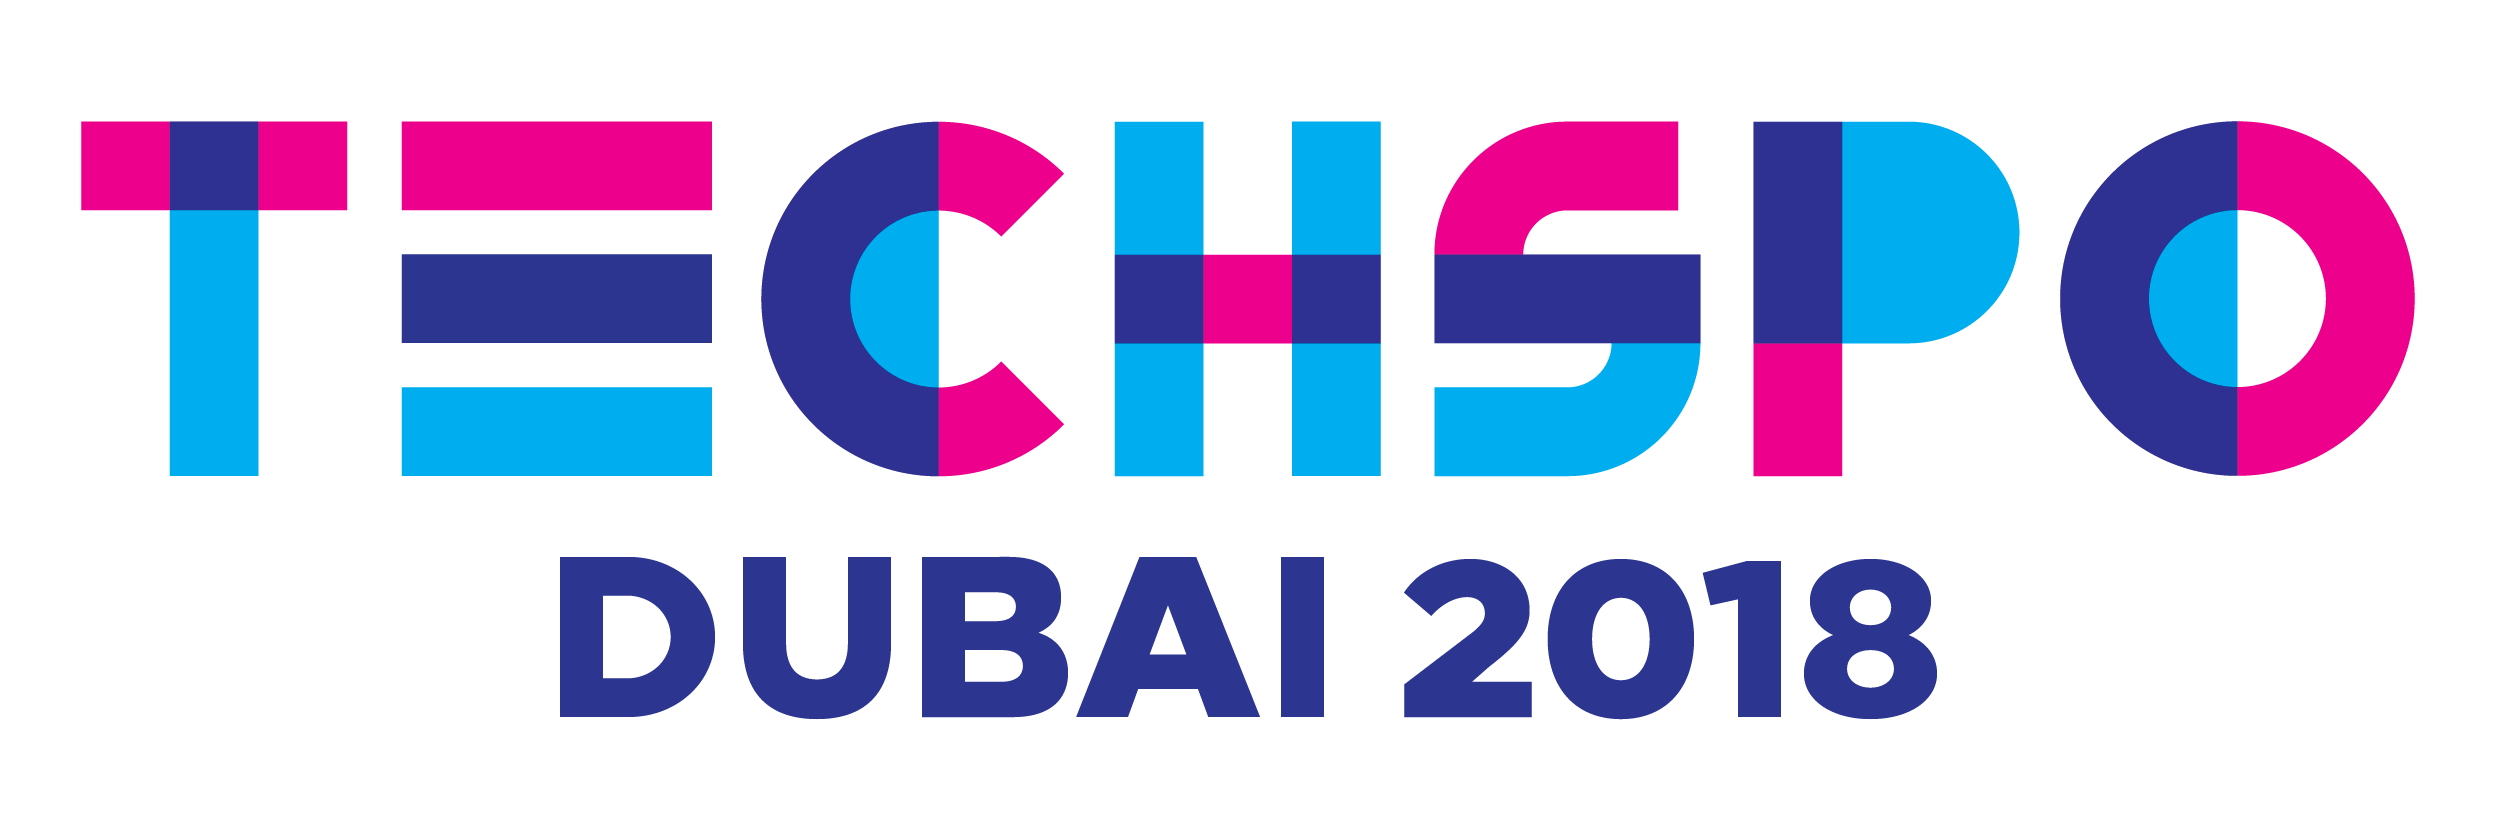 TECHSPO Dubai 2018 - Coming Soon in UAE